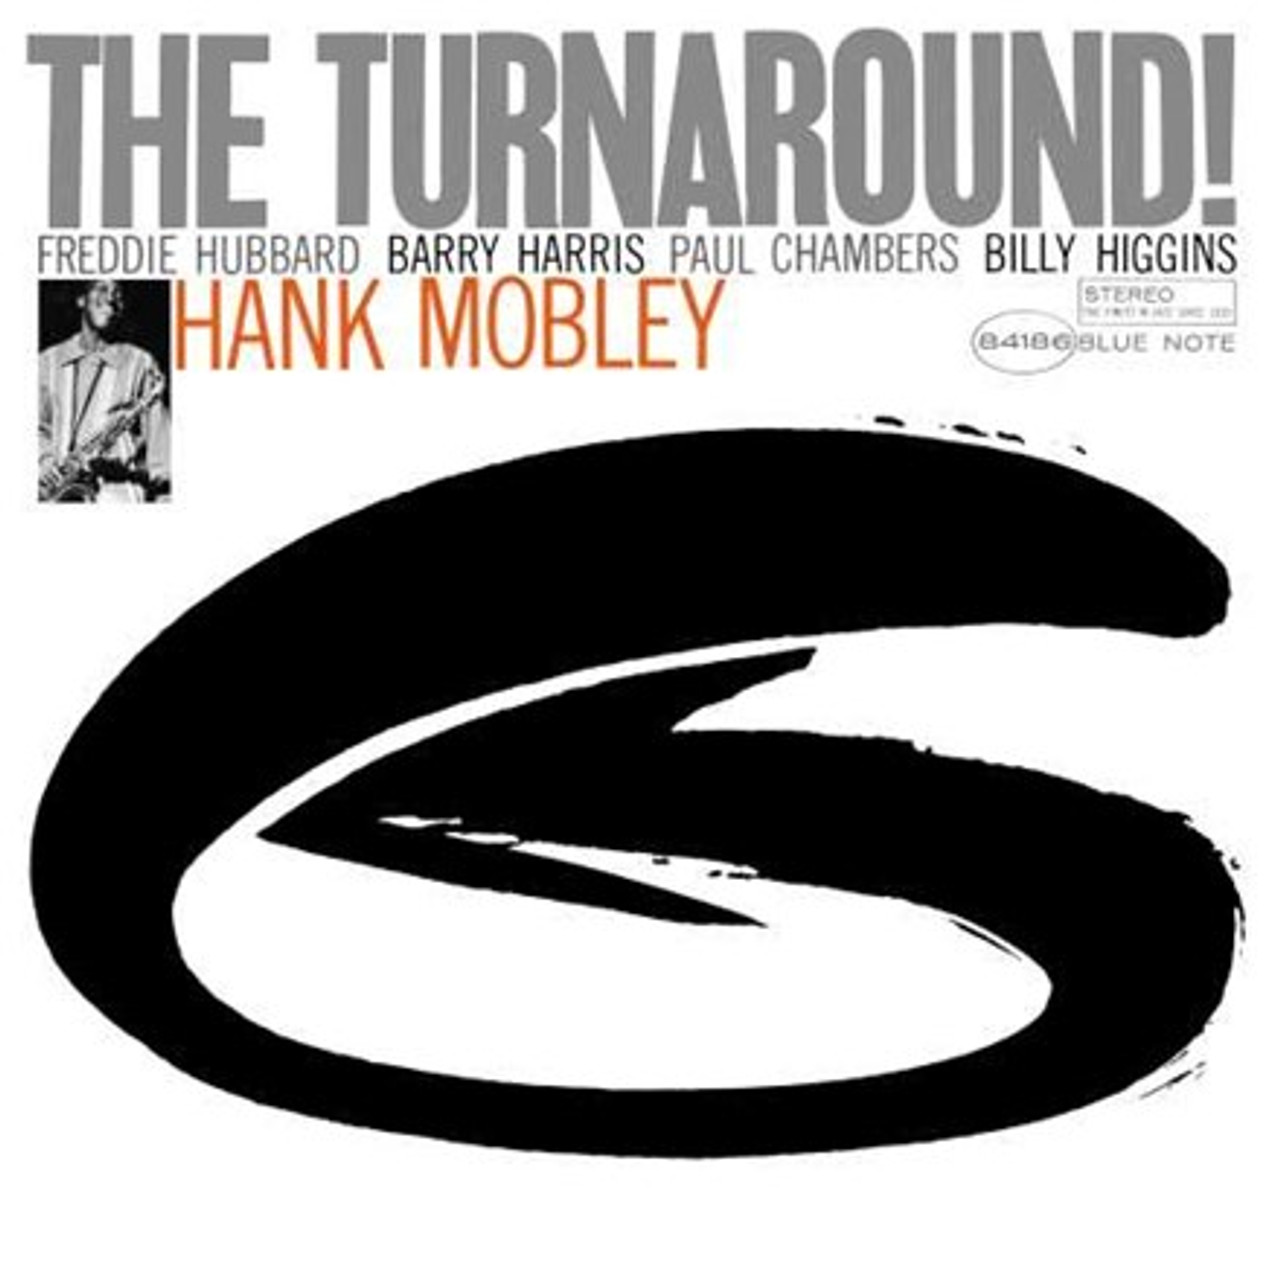 Hank Mobley - The Turnaround: Anniversary LP) - Music